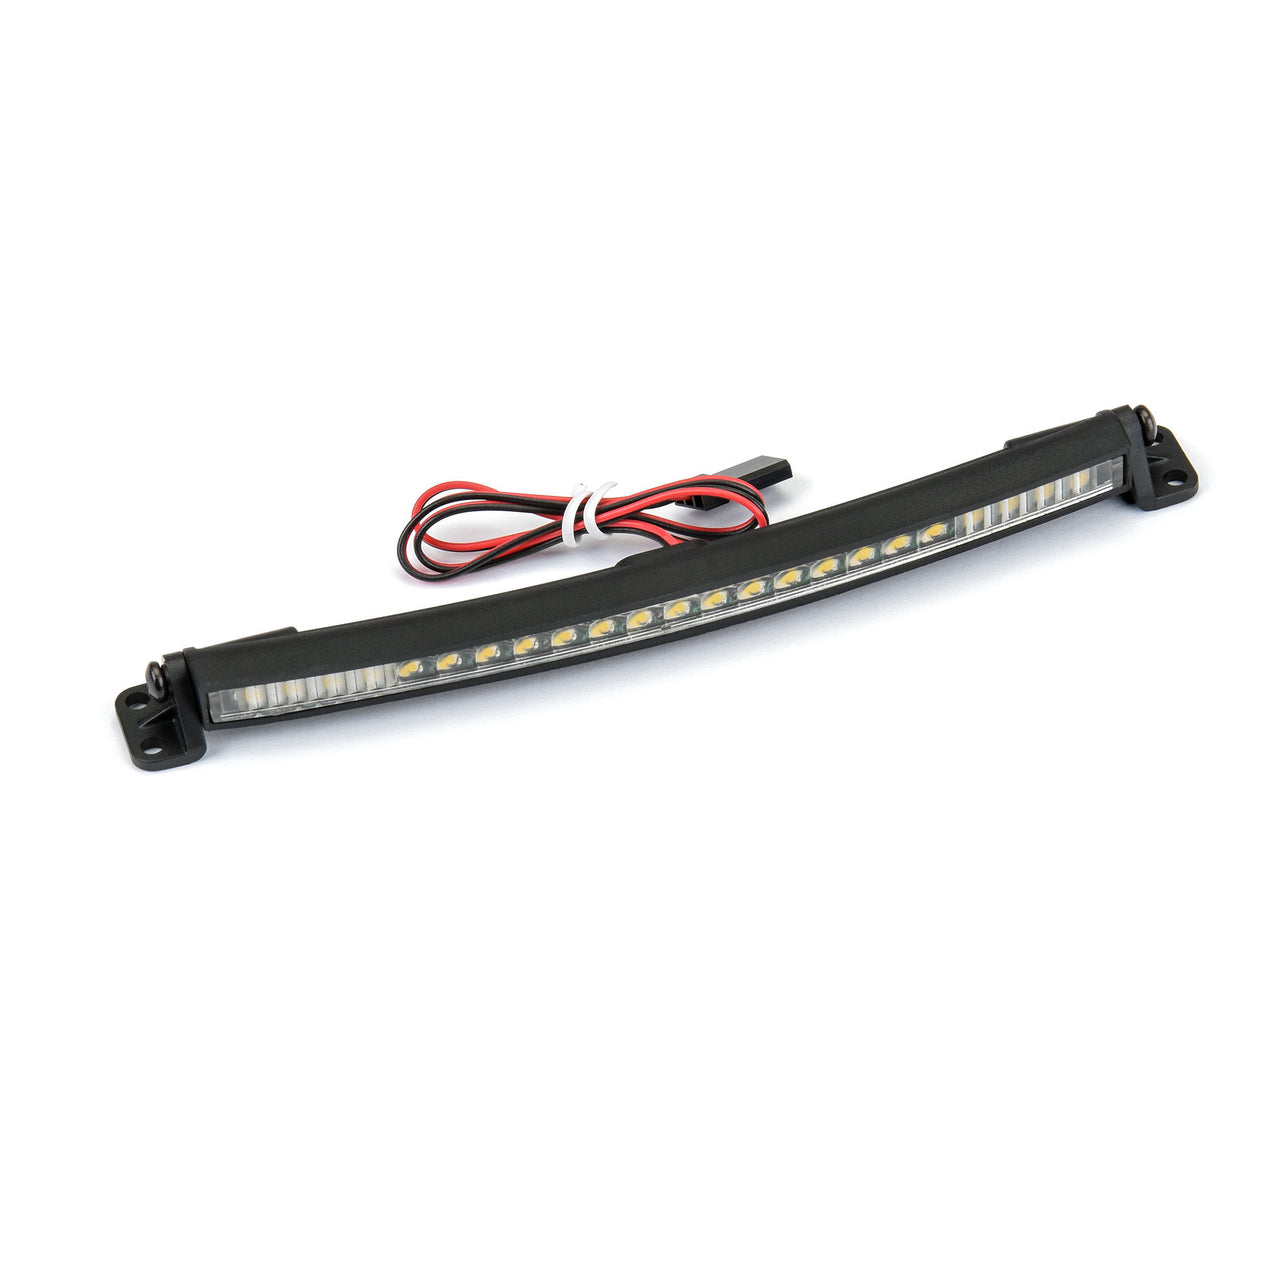 PRO635202 5" Ultra-Slim LED Light Bar Kit 5V-12V (Curved)